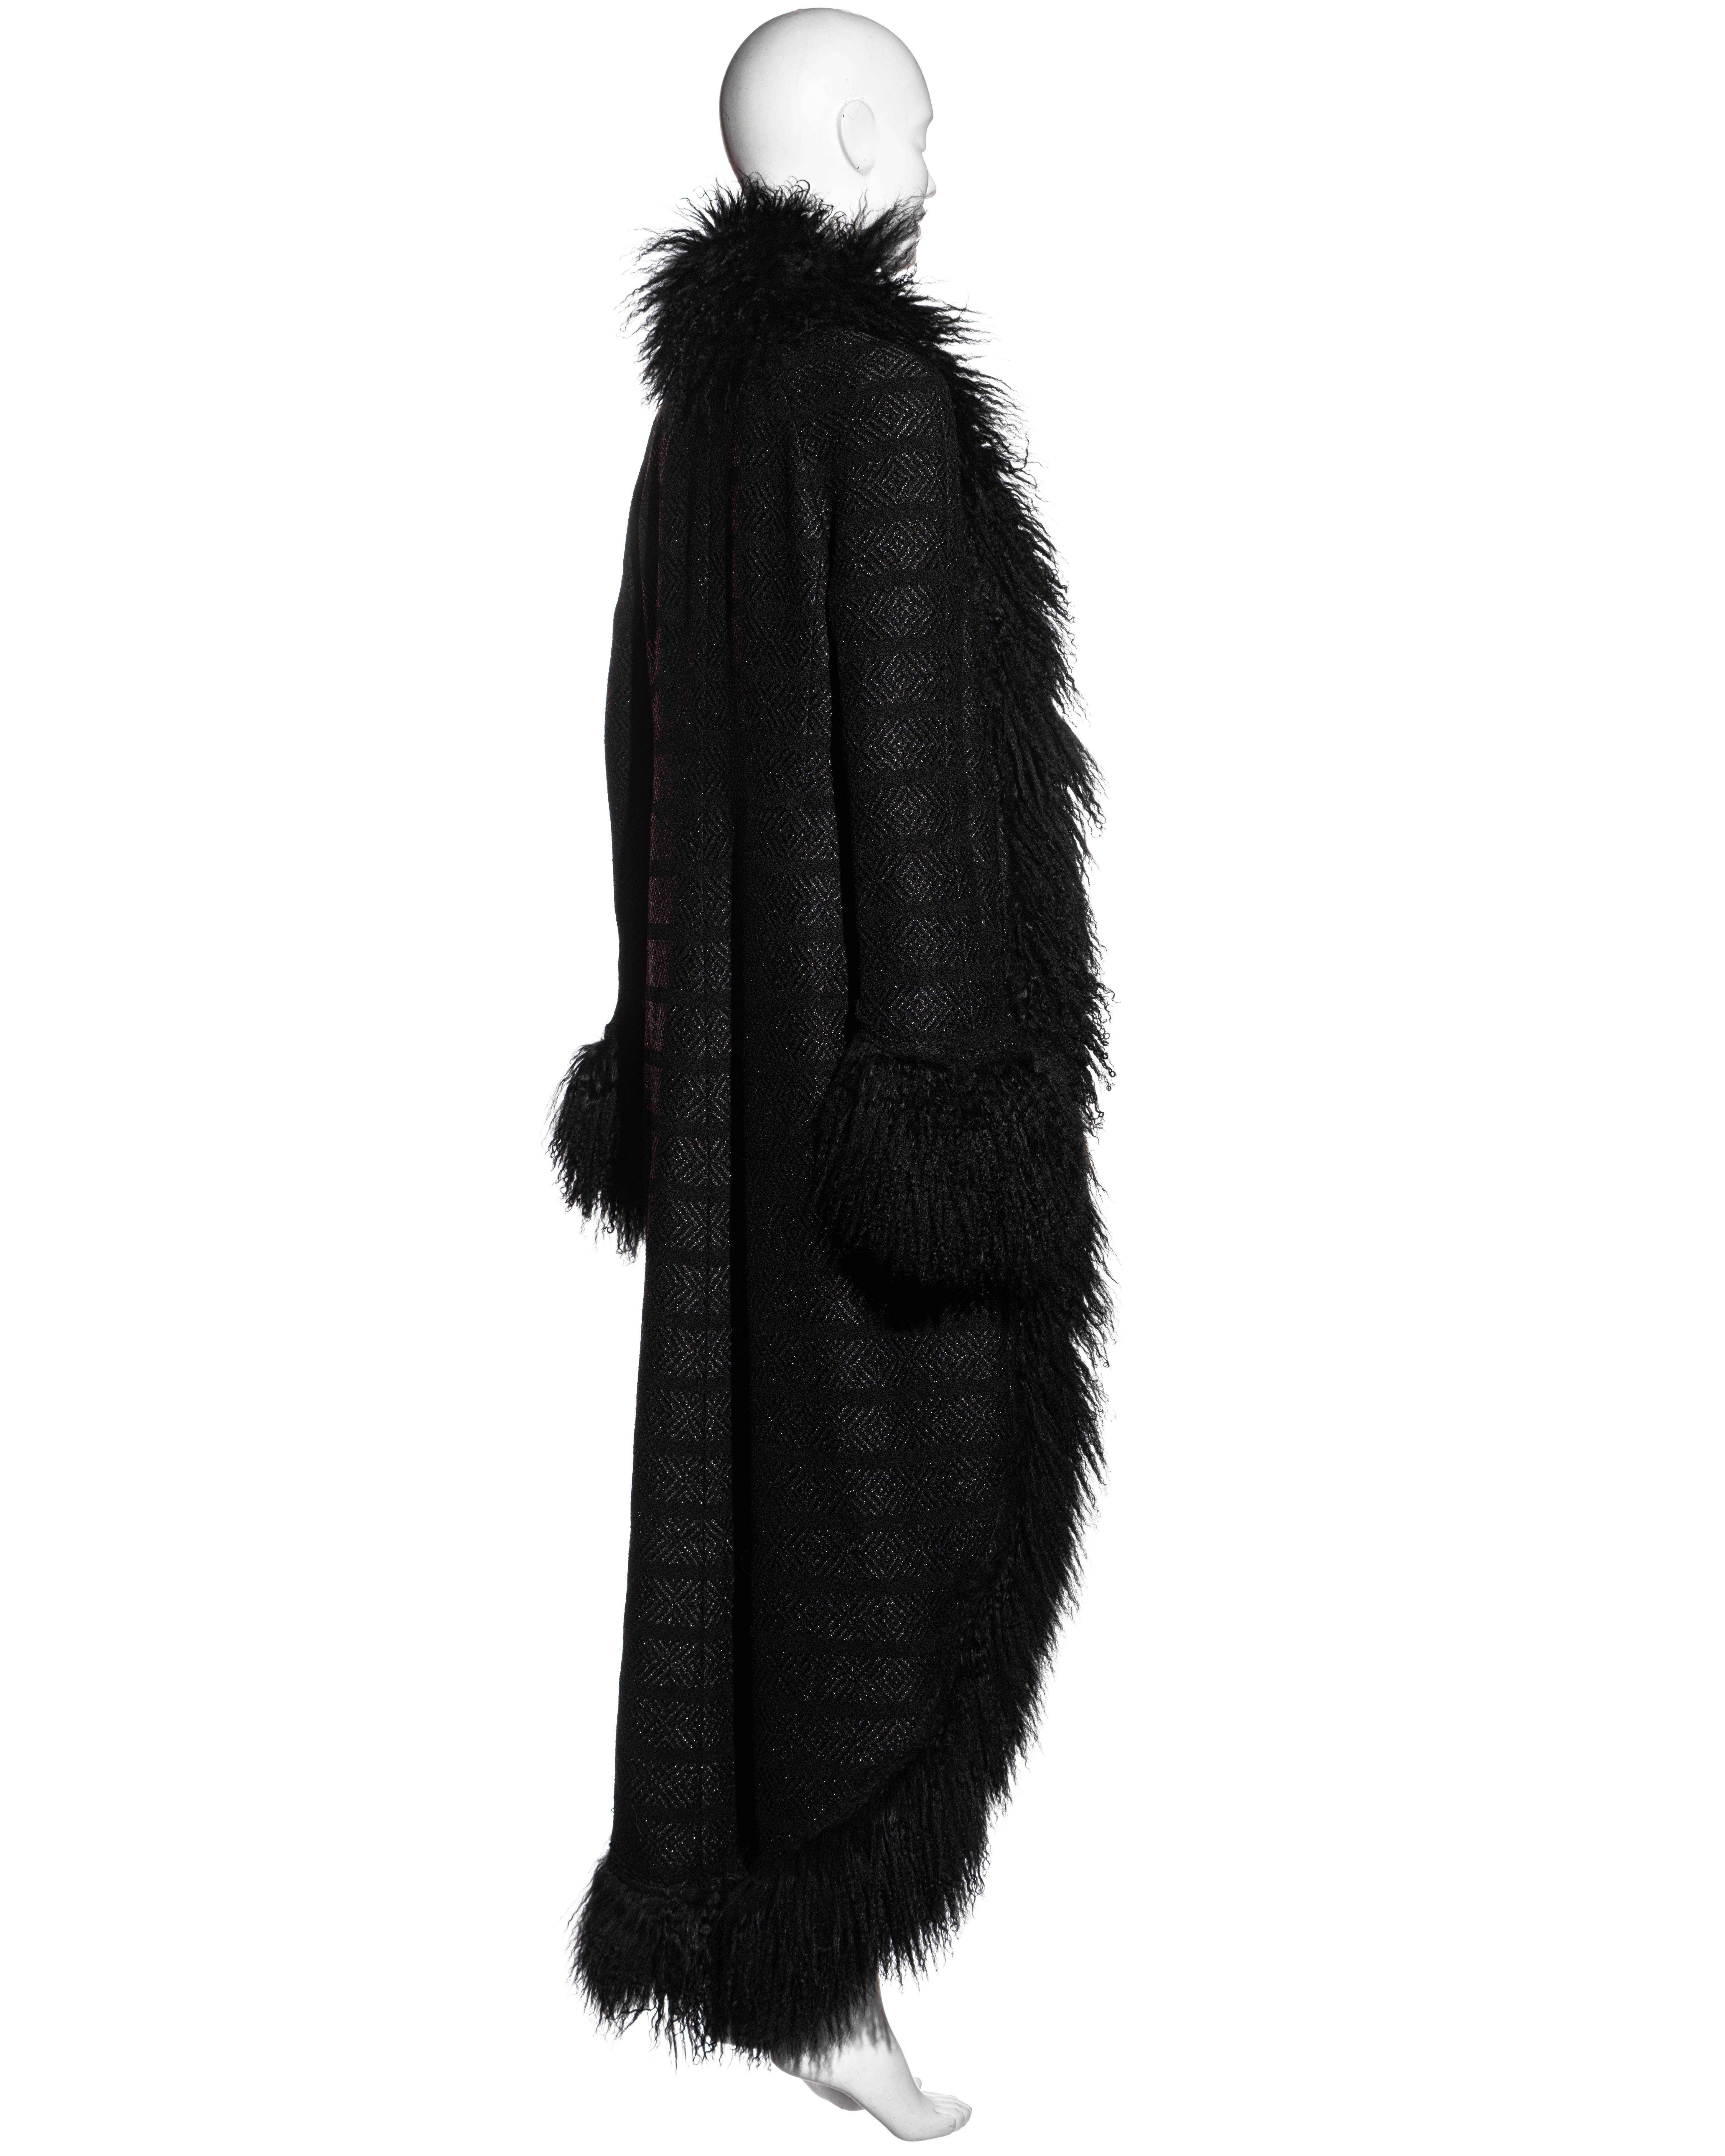 Chanel by Karl Lagerfeld black tweed and Mongolian lambs wool coat, fw 2008 6